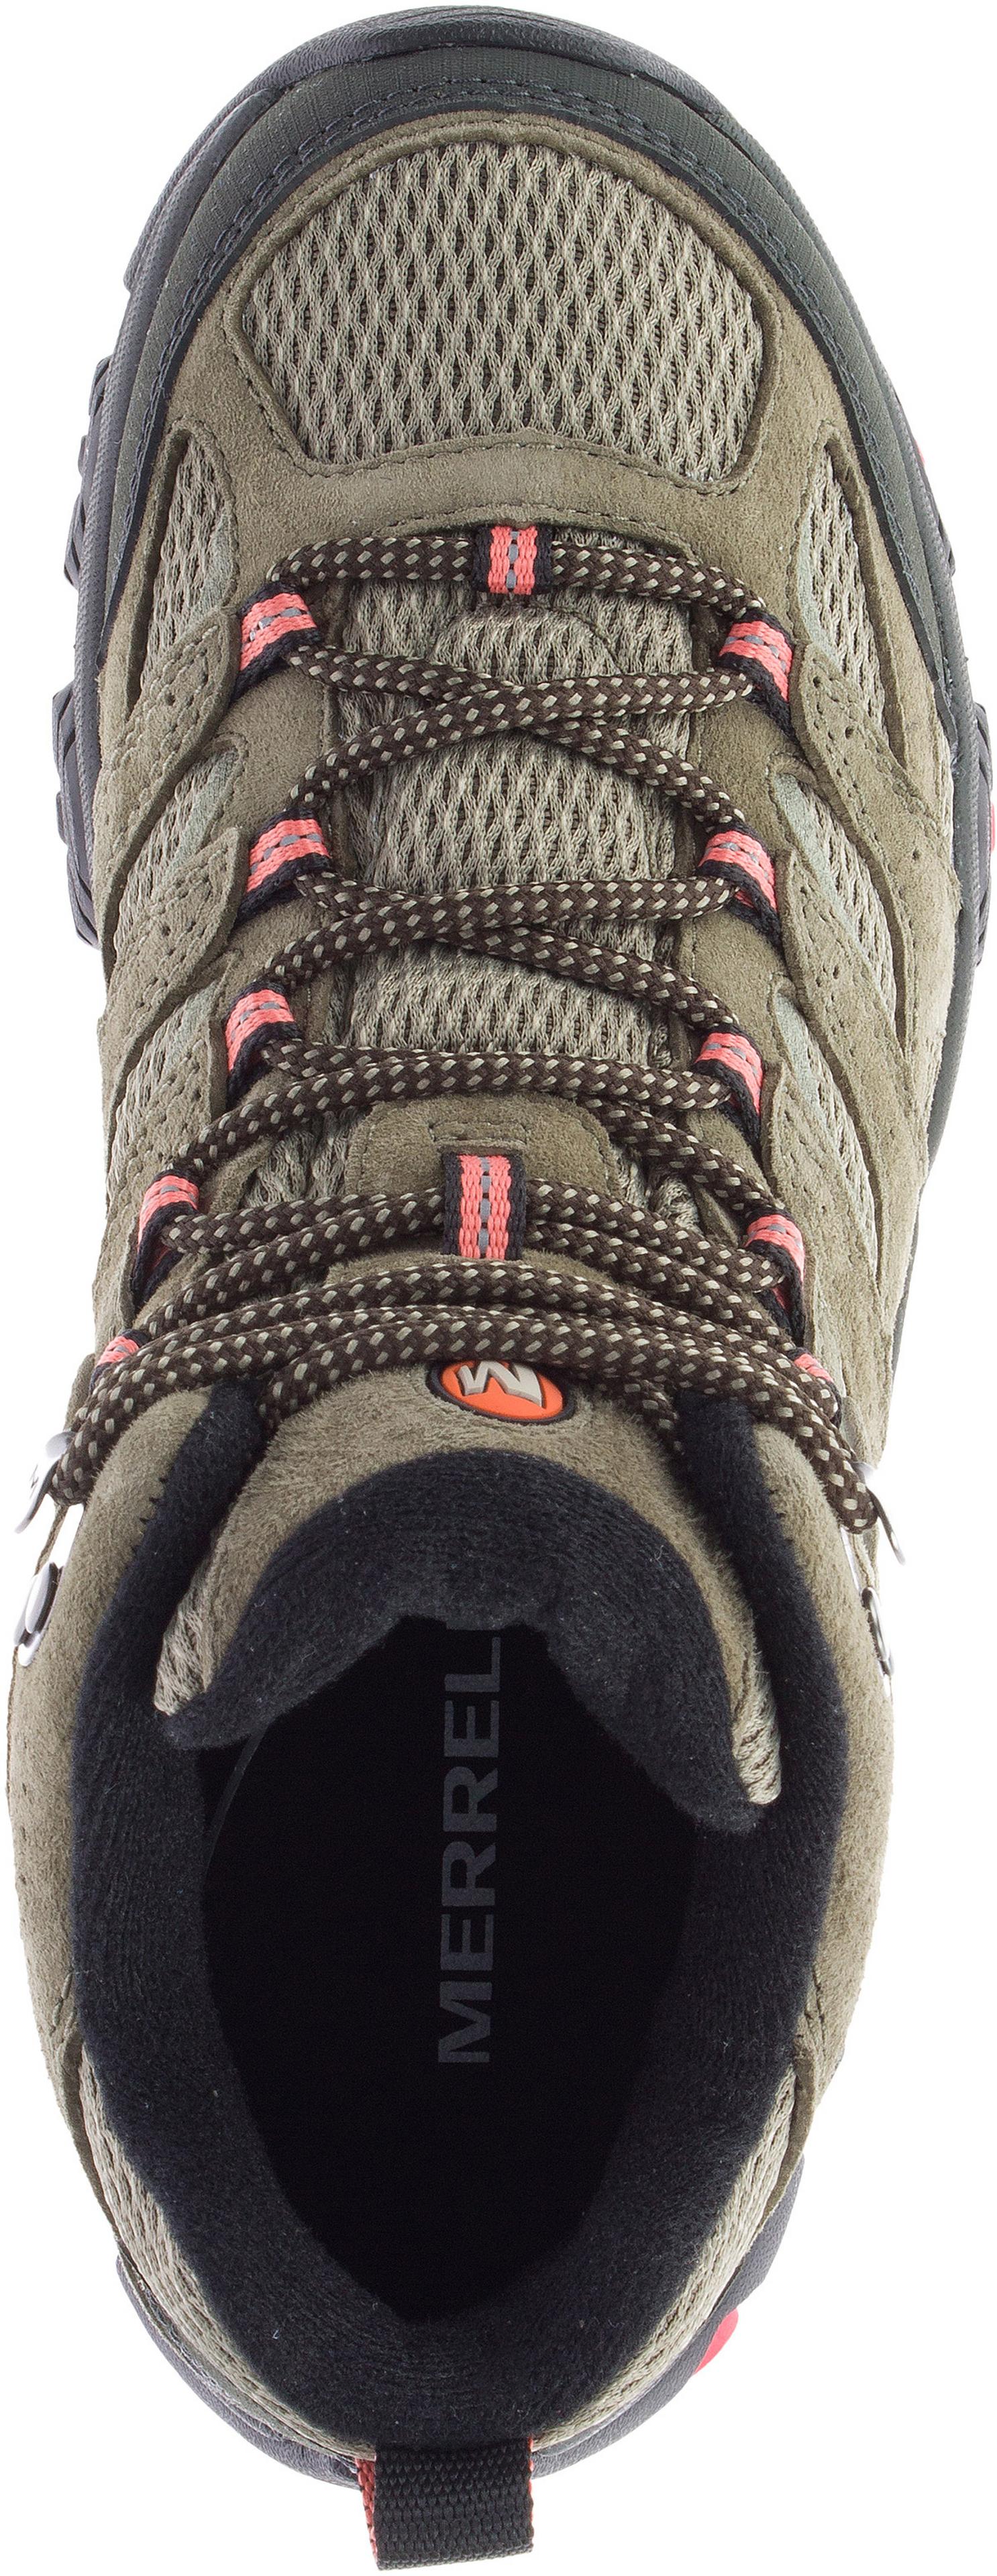 Merrell Moab 3 GORE-TEX Hiking Shoes - Women's